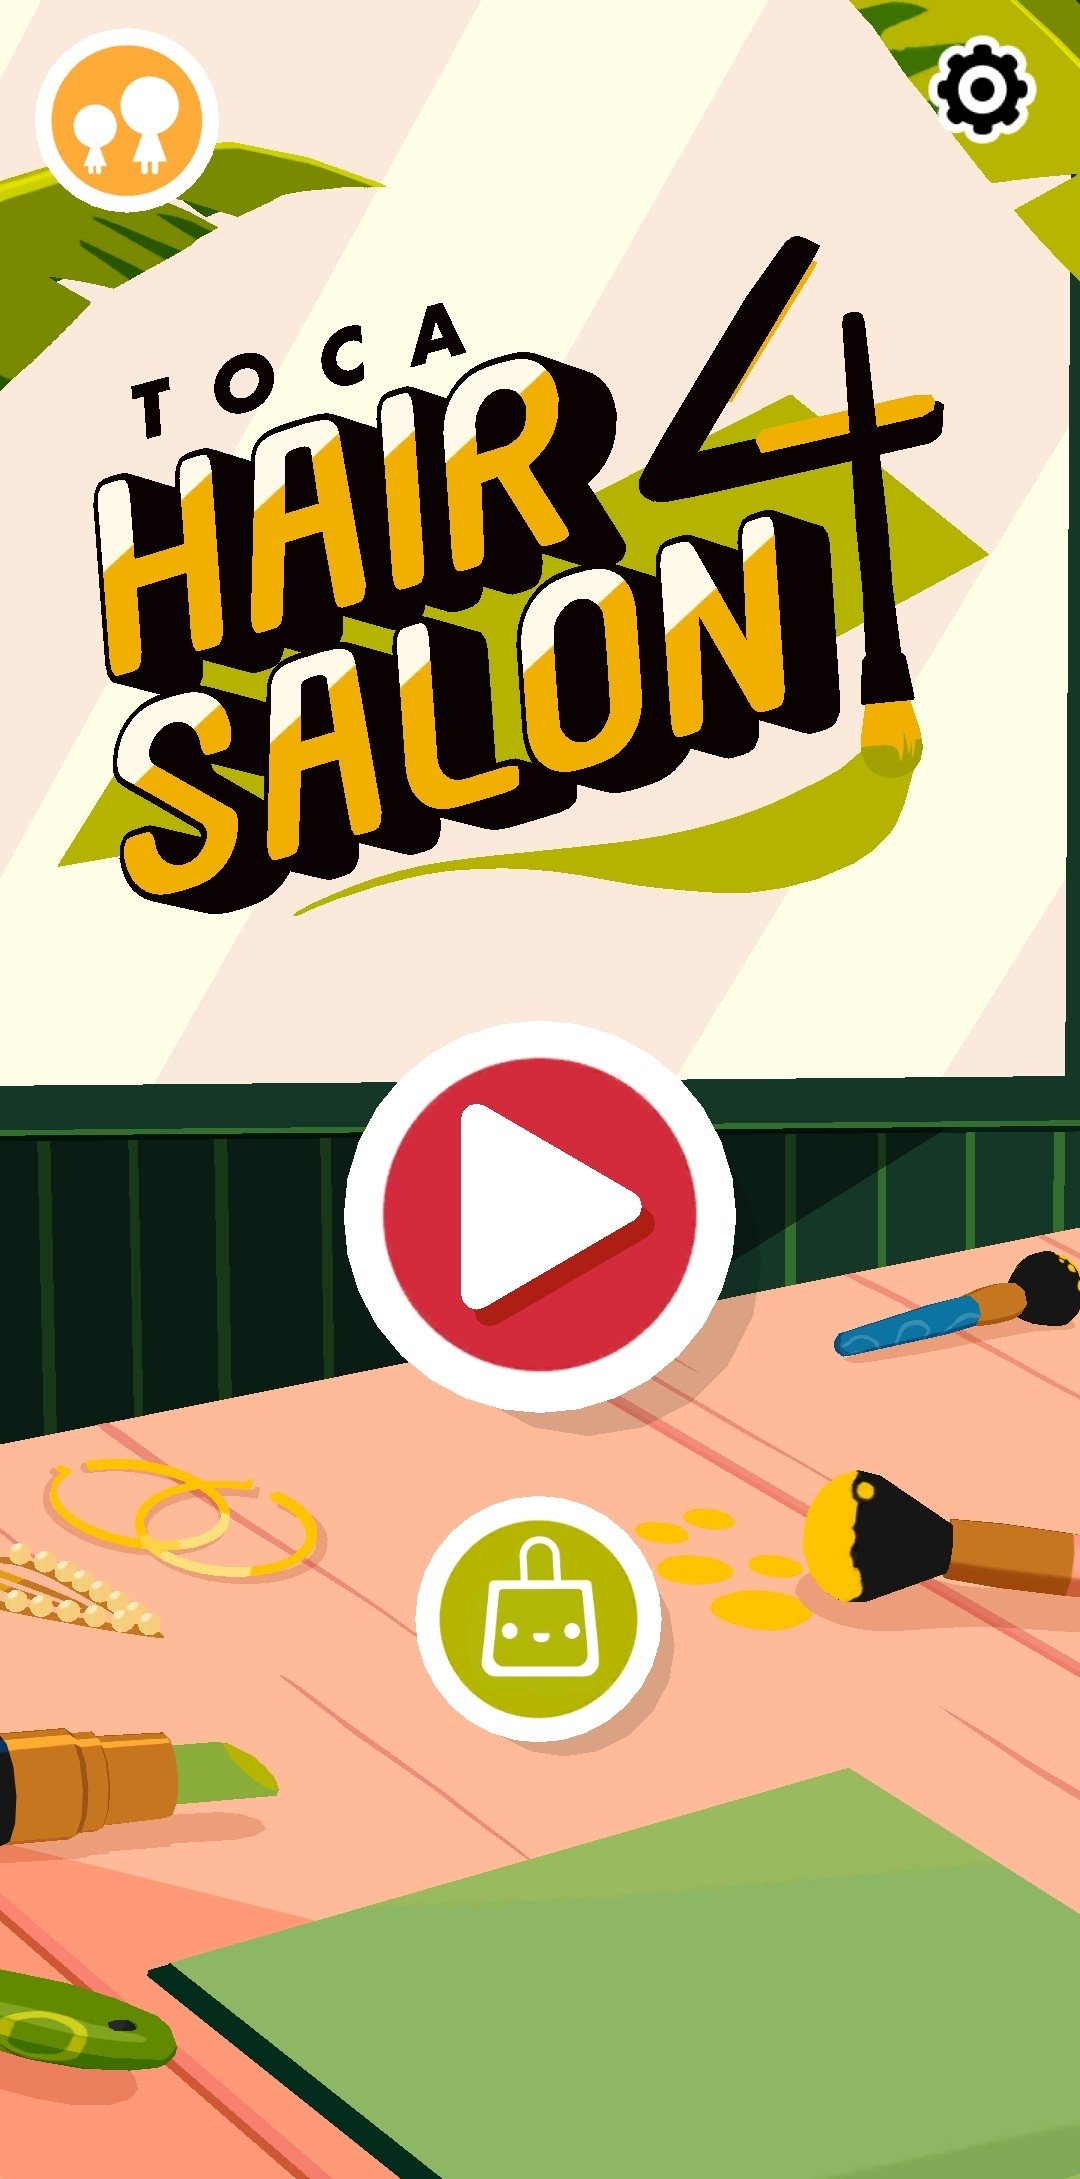 toca boca hair salon 4 online